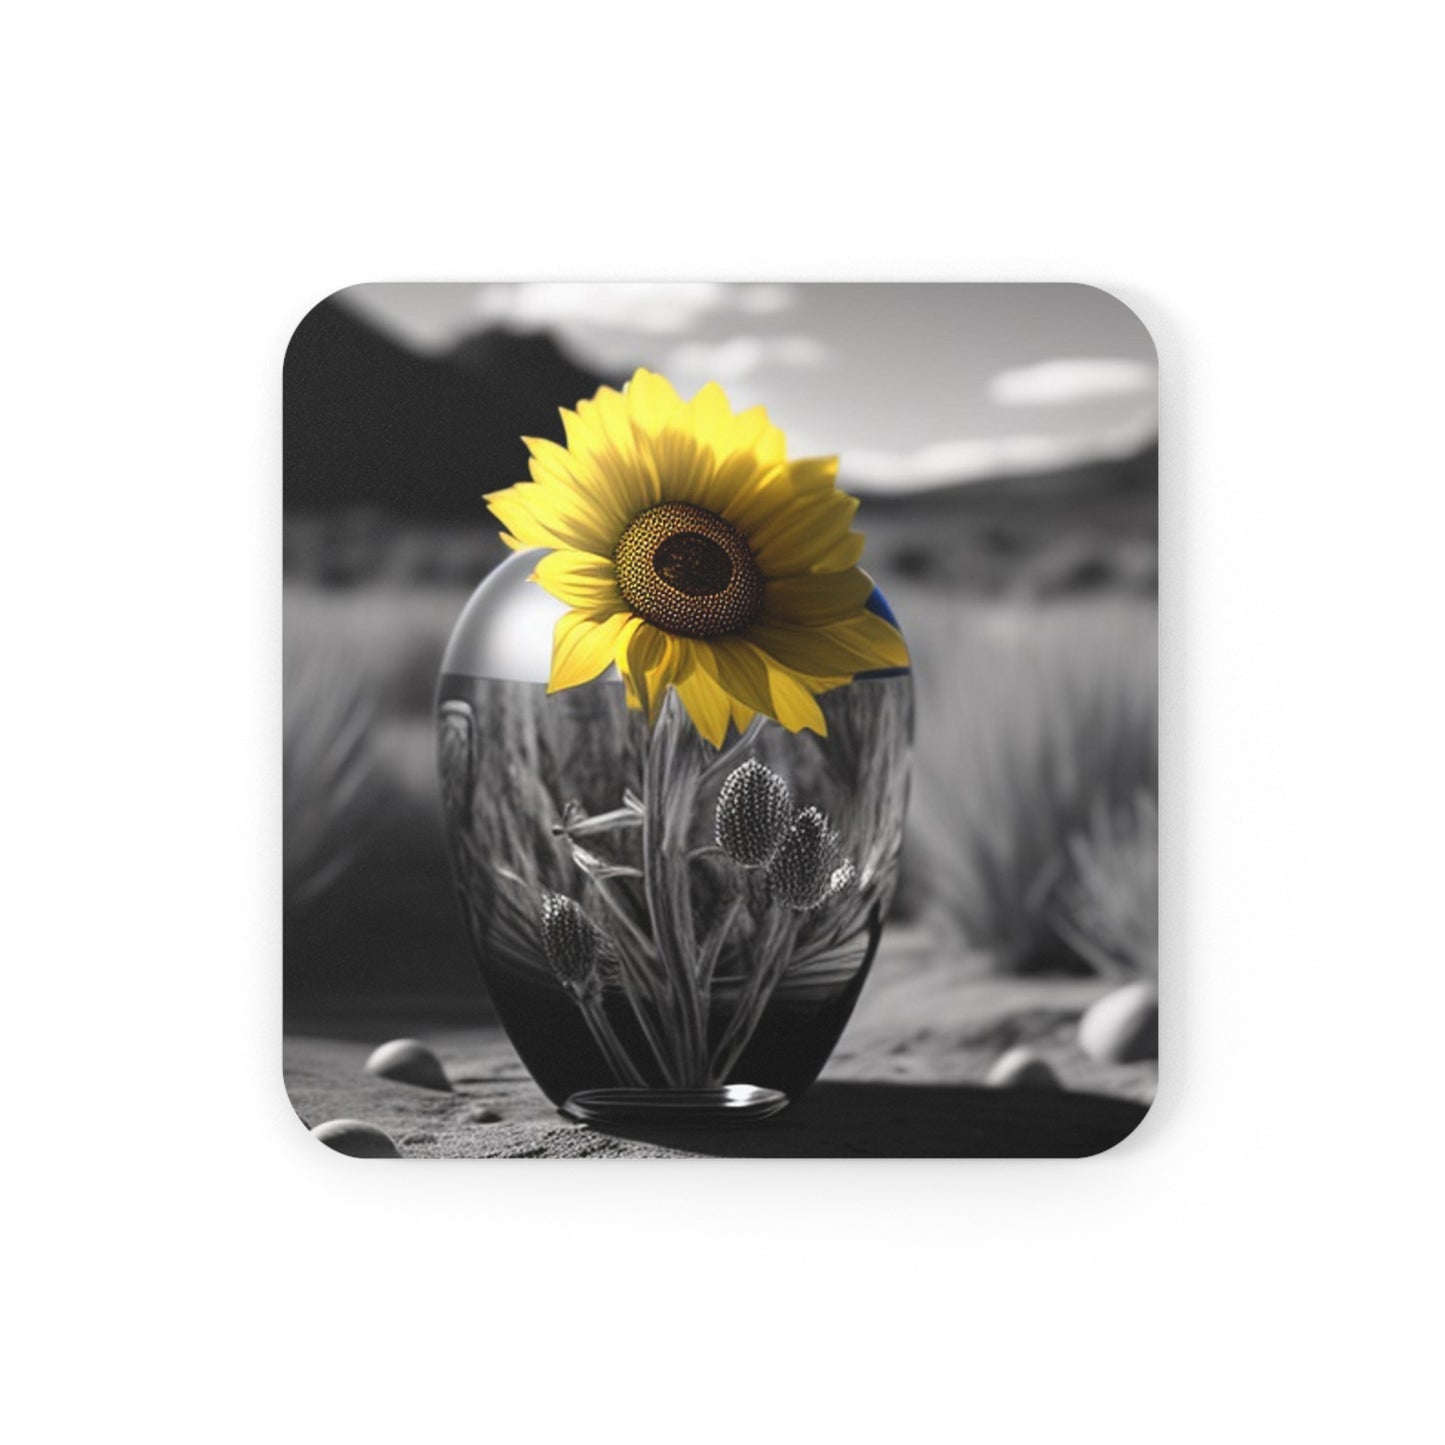 Cork Back Coaster Yellw Sunflower in a vase 3